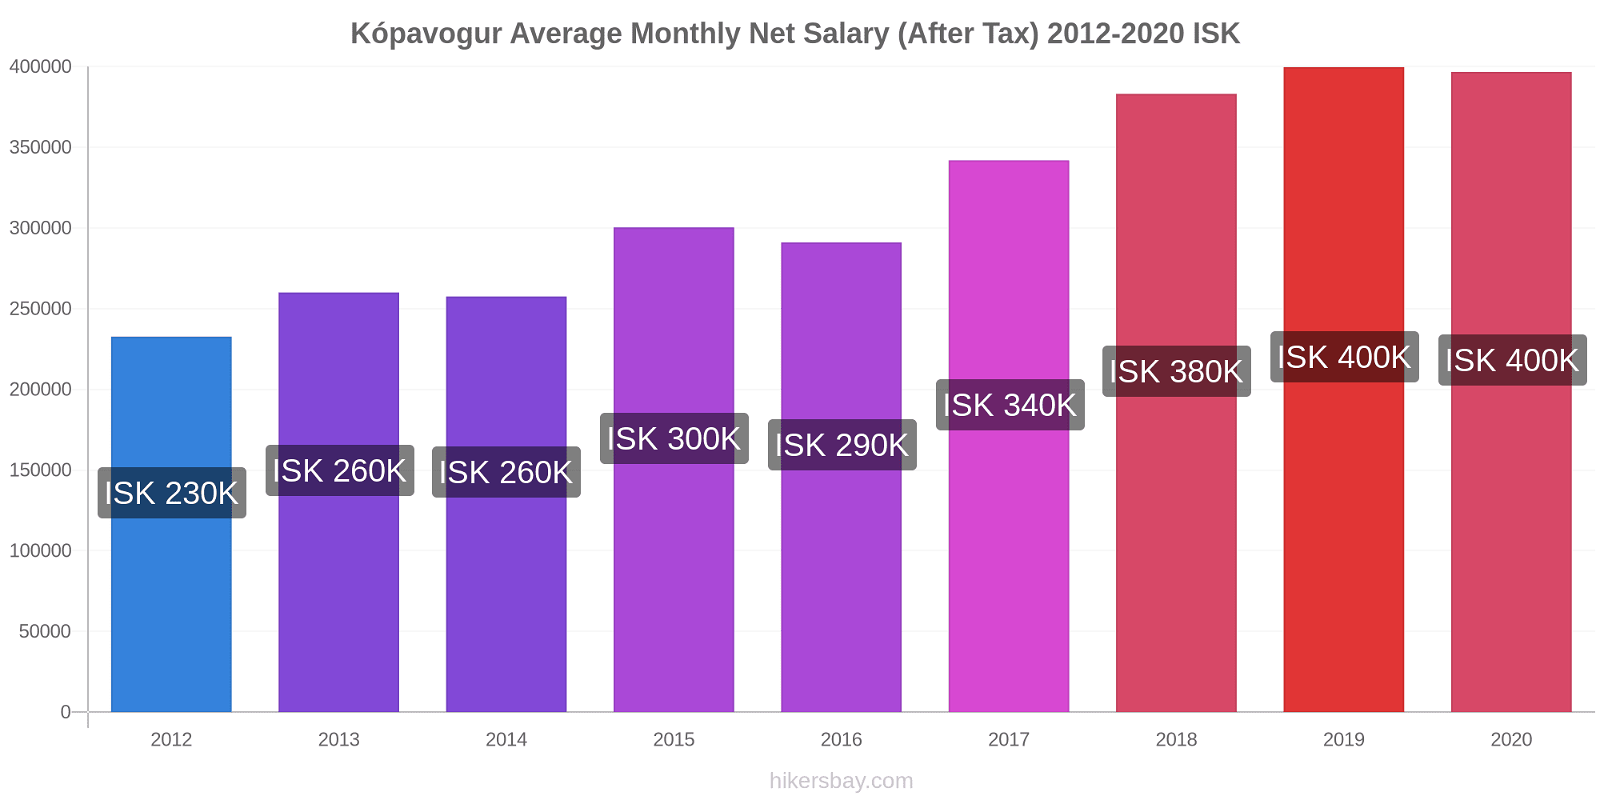 Kópavogur price changes Average Monthly Net Salary (After Tax) hikersbay.com